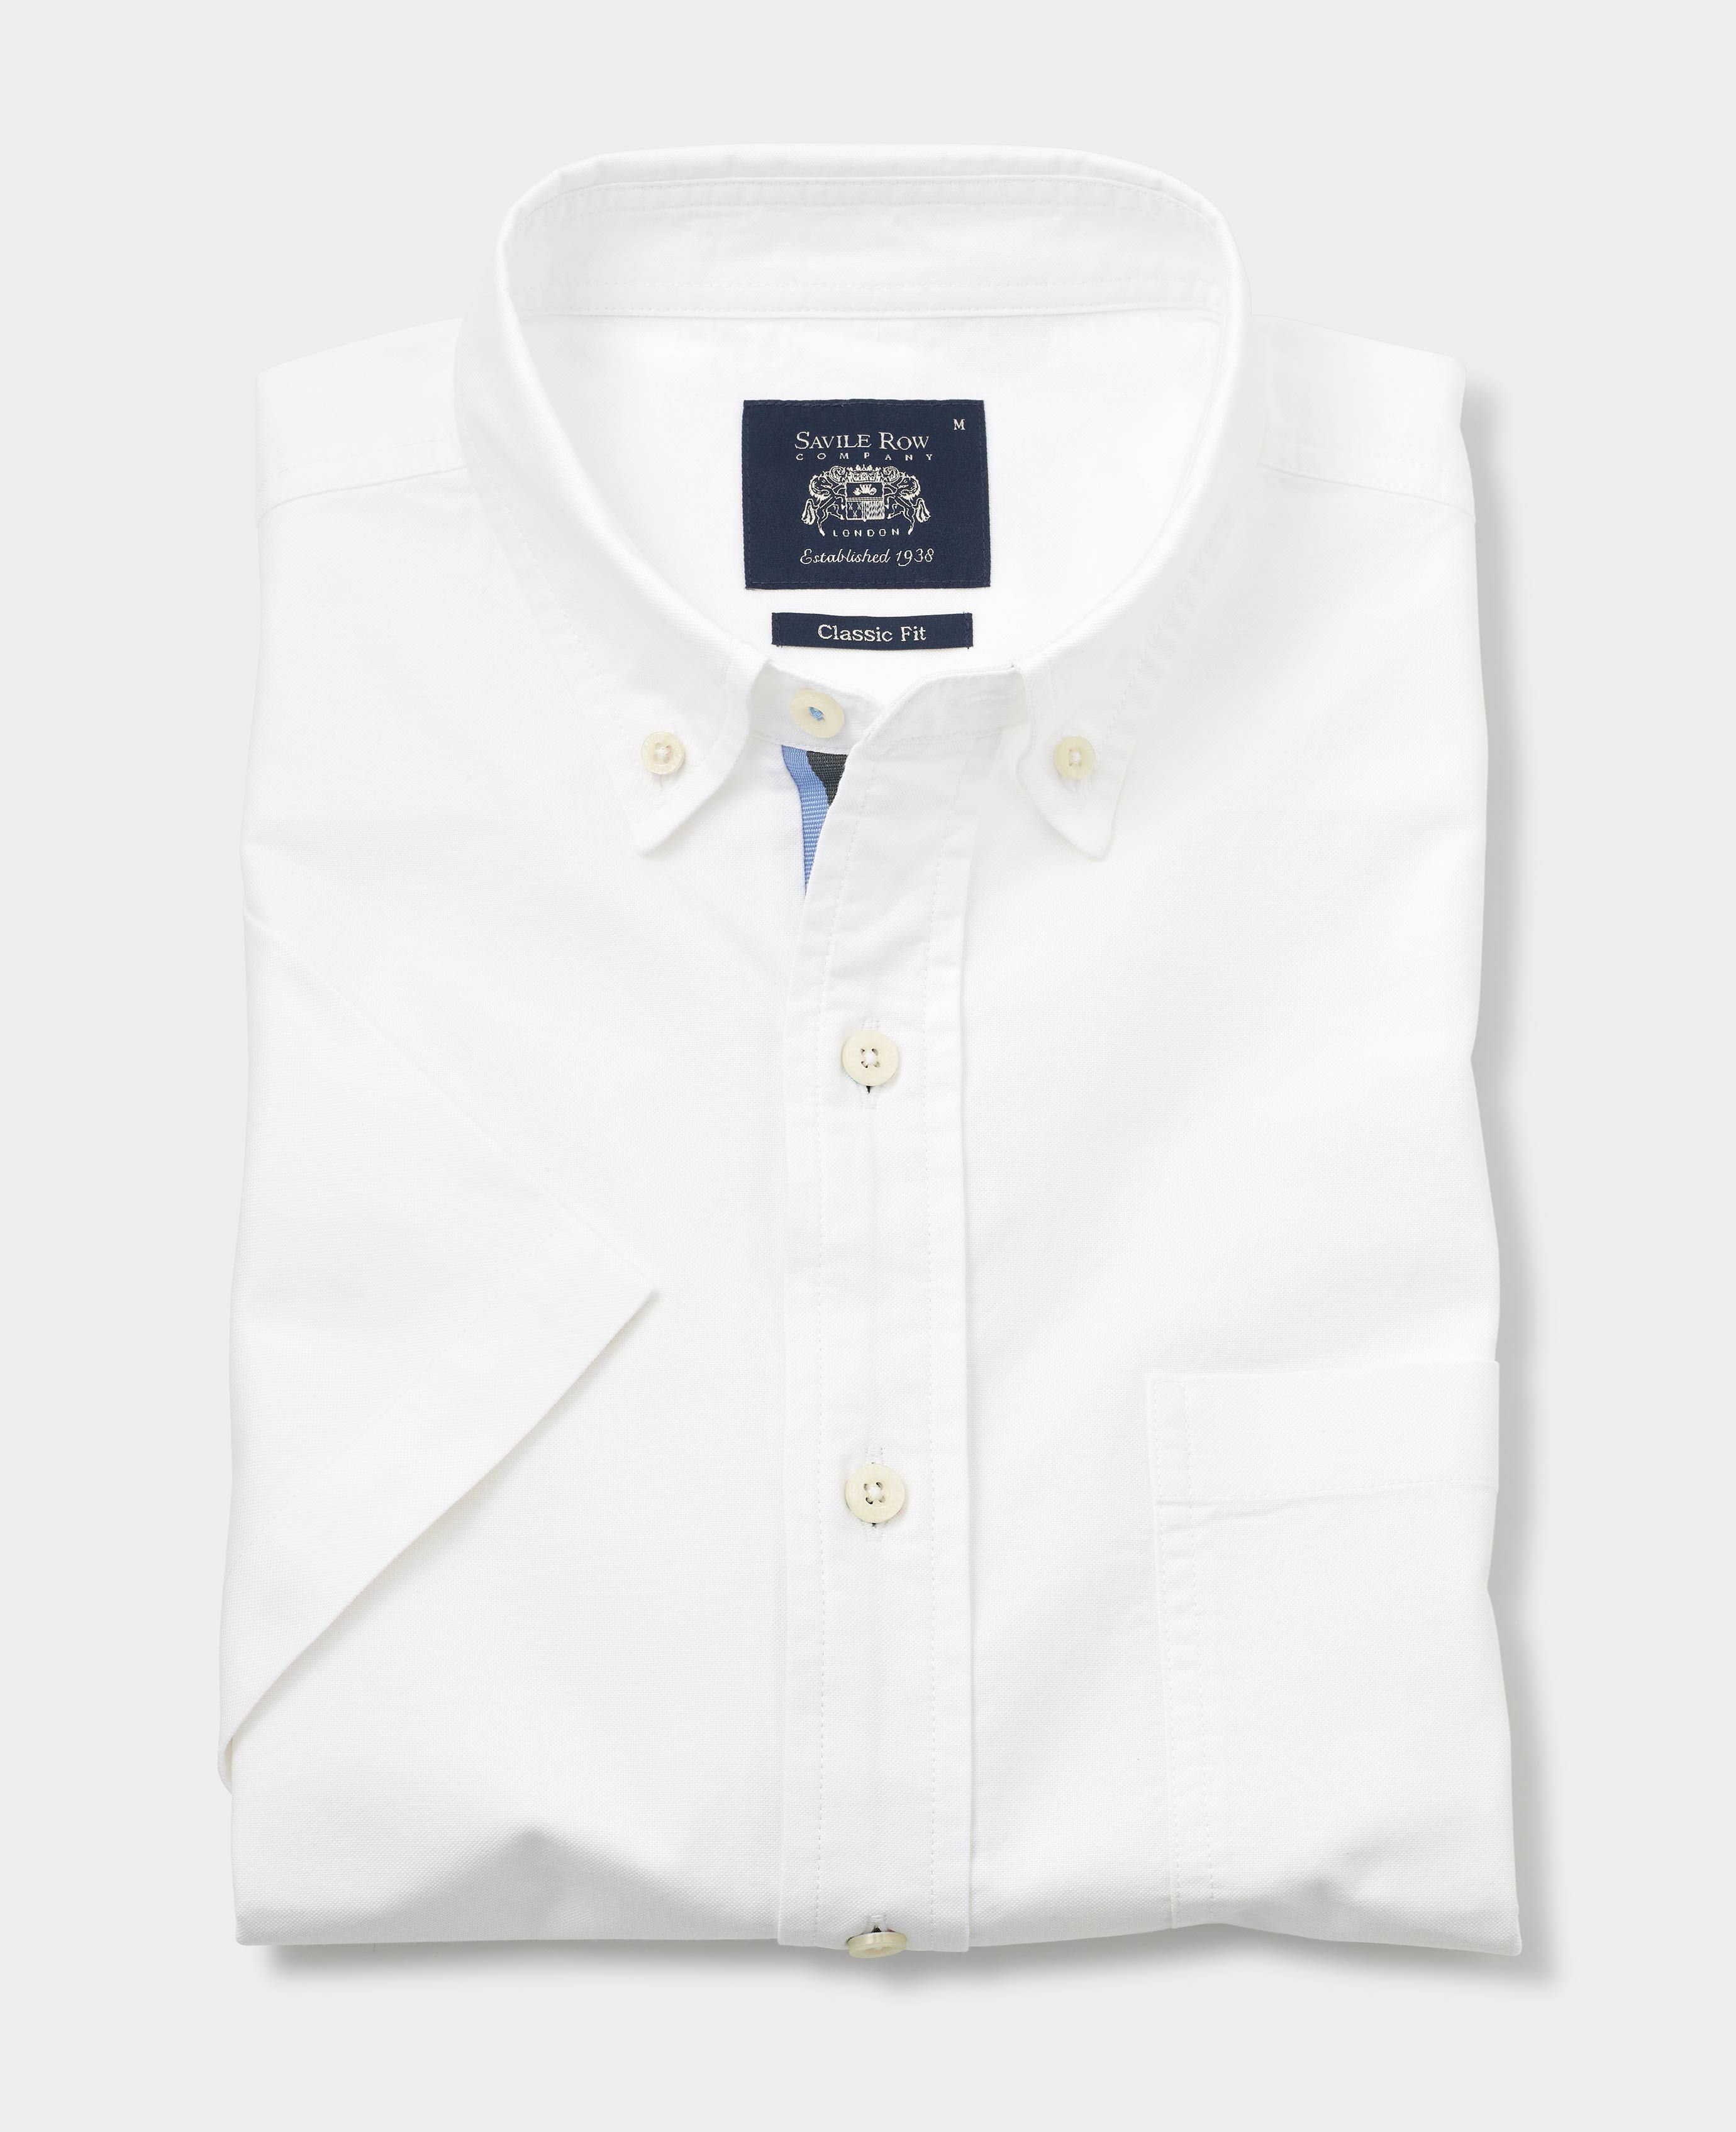 Men’s Short Sleeve Oxford Shirt in White | Savile Row Co